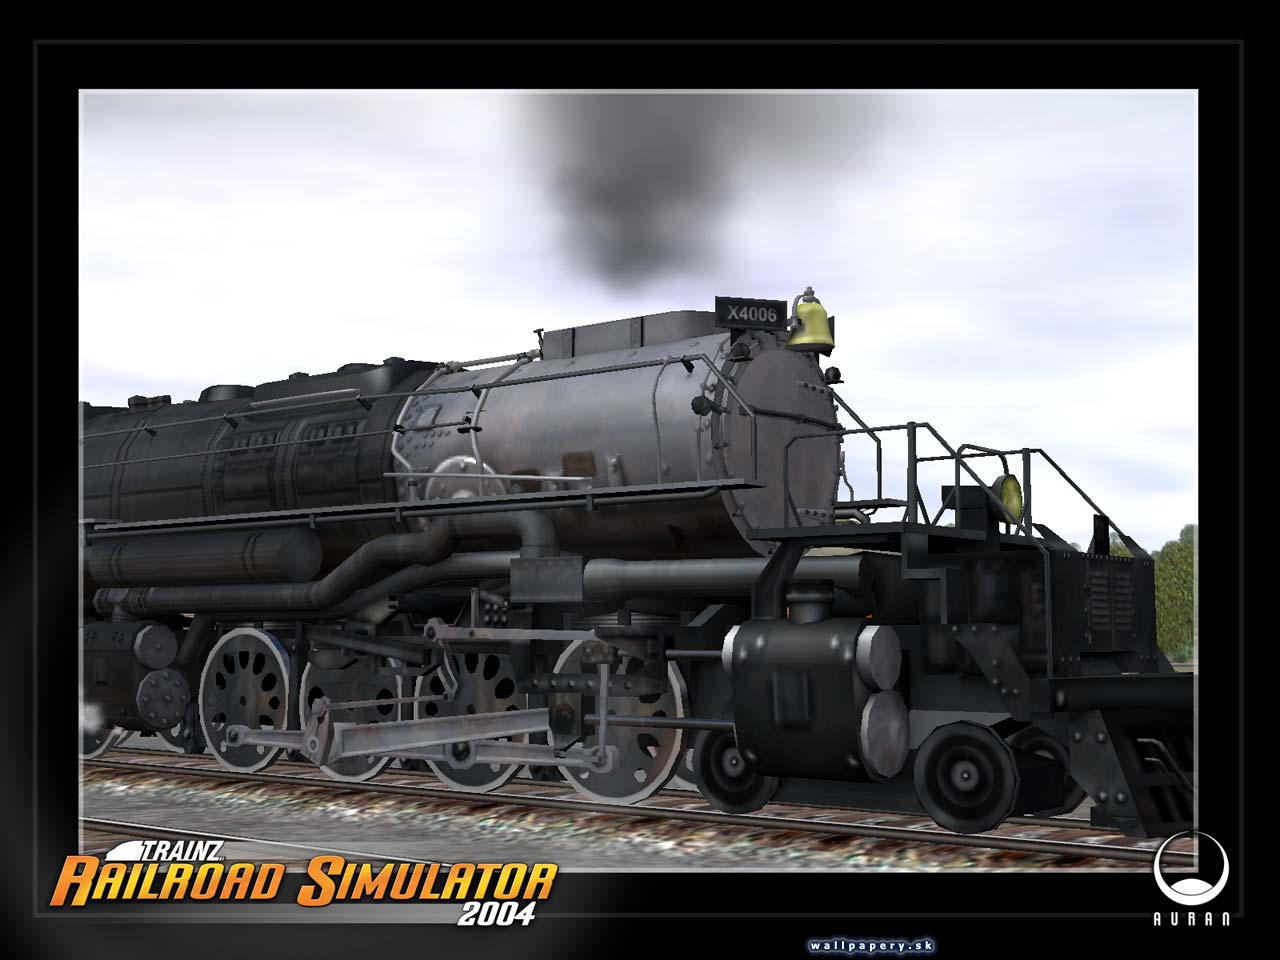 Trainz Railroad Simulator 2004 - wallpaper 2